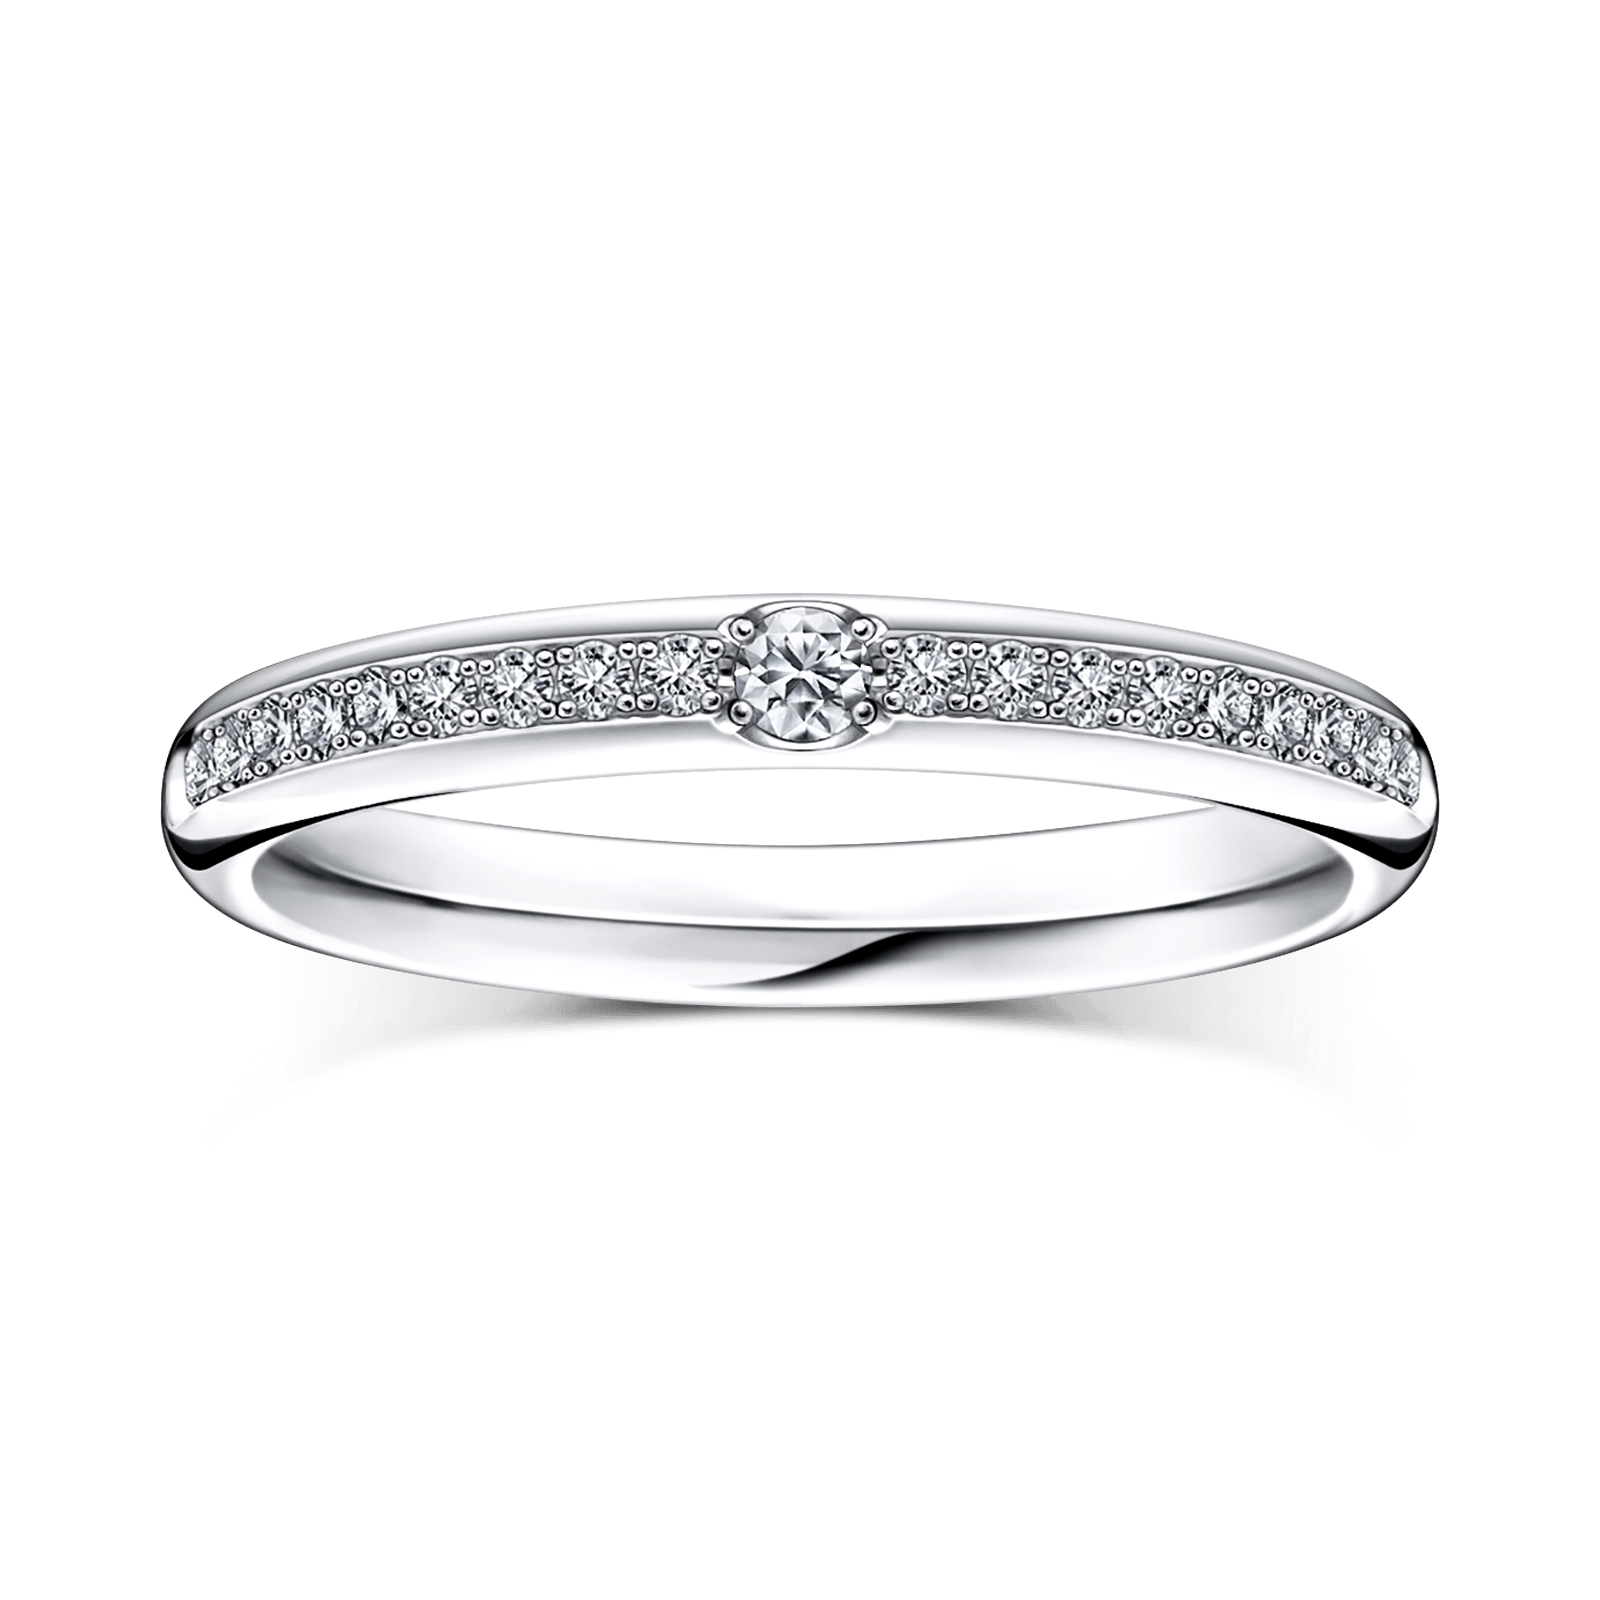 APPLAUSE|婚約指輪・結婚指輪ならラザール ダイヤモンド